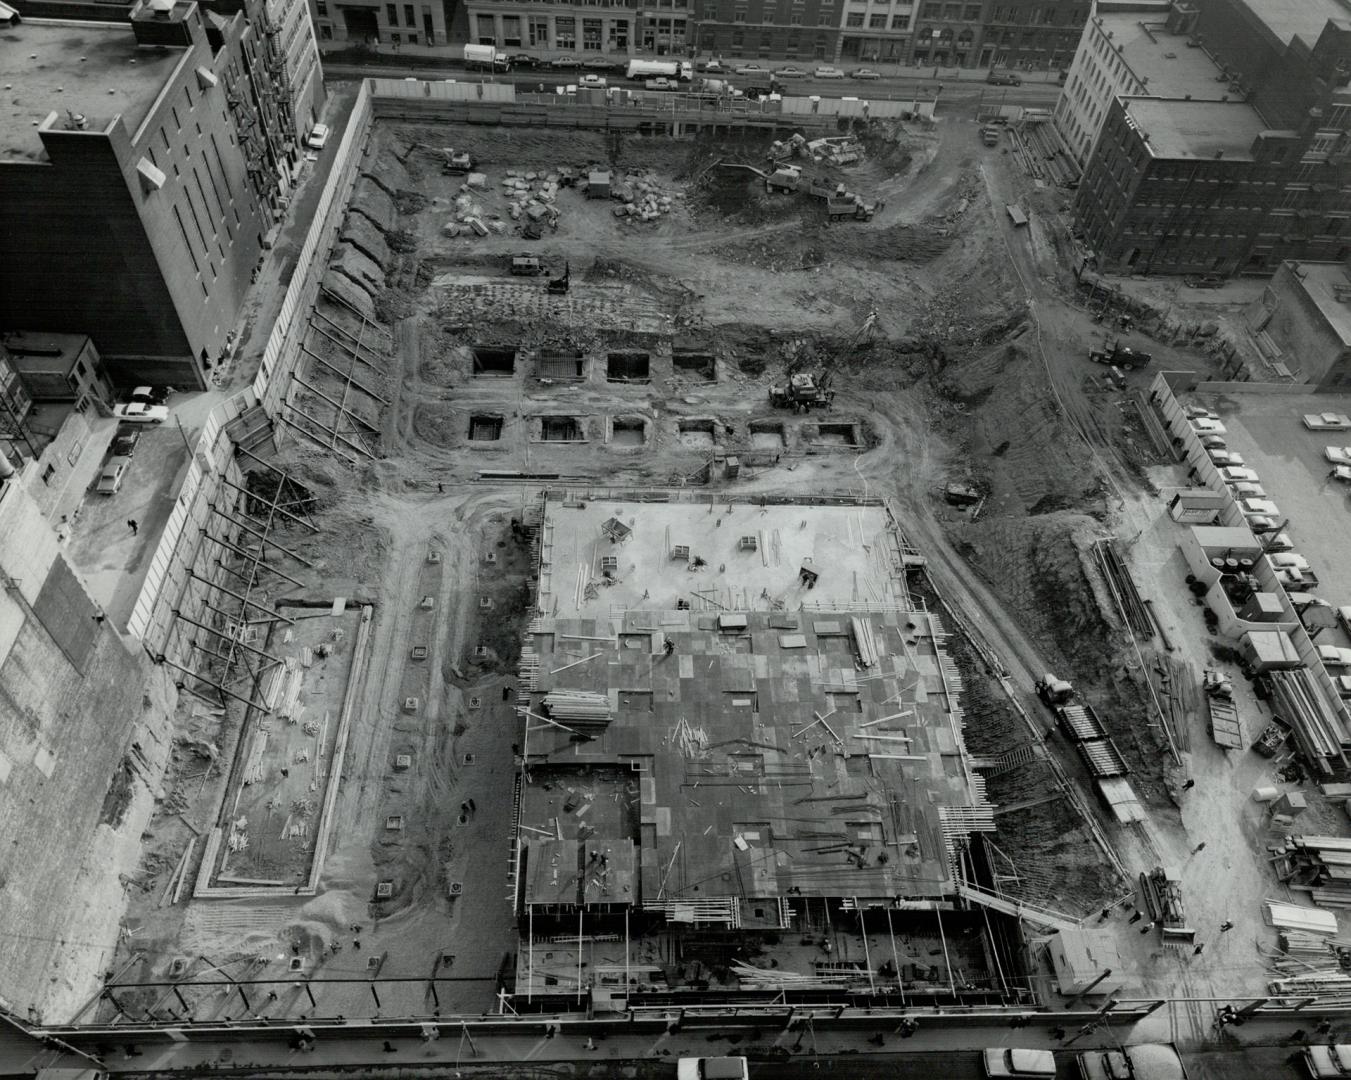 Canada - Ontario - Toronto - Buildings - Toronto Dominion Centre - Construction and Progress Pix - 2 files